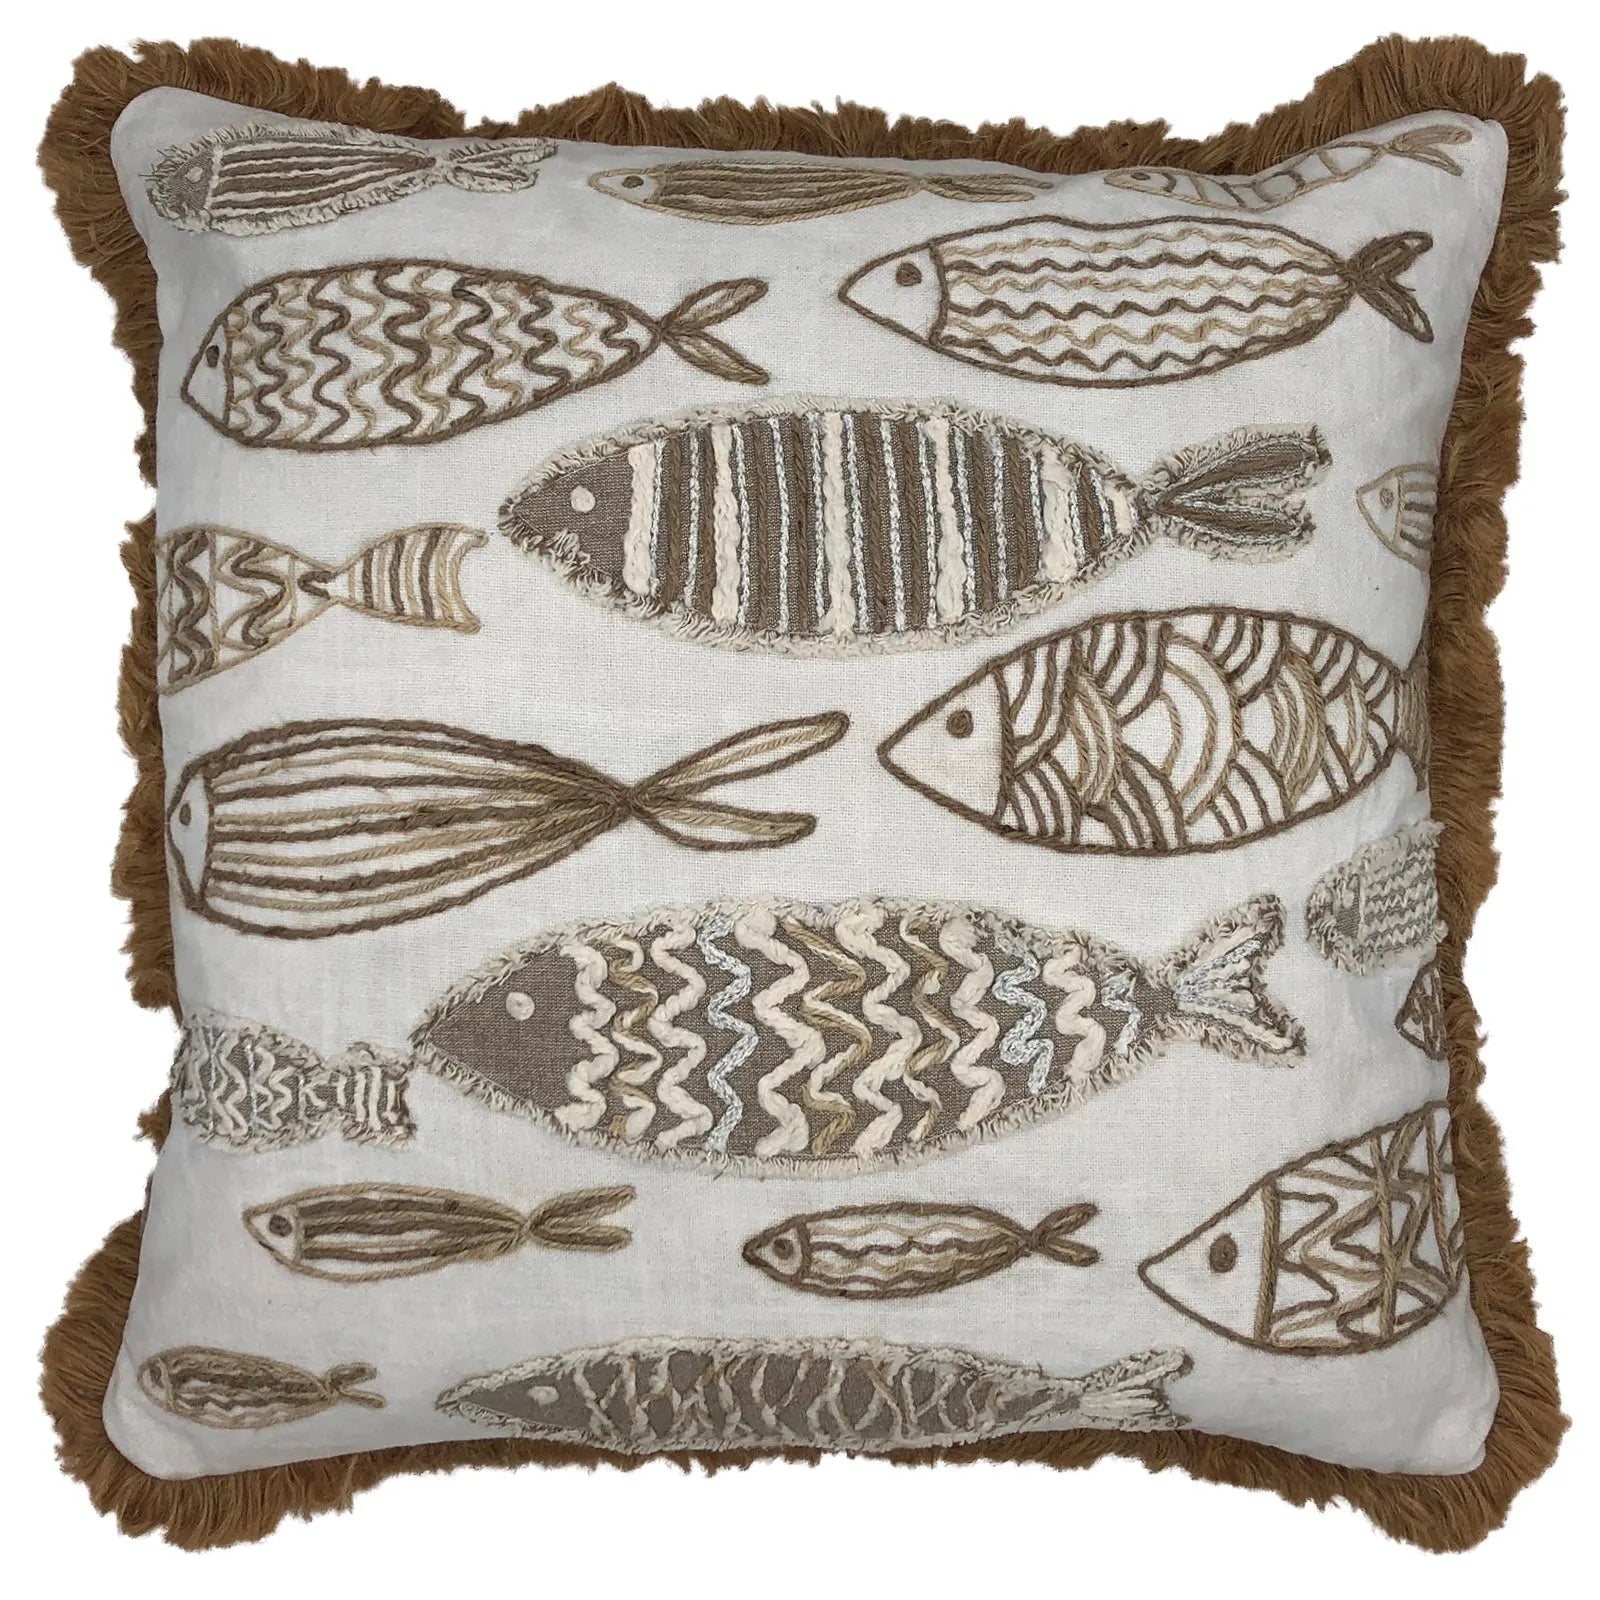 Ocean Fish Print Embroidery Pillow, 18" X 18" home decor - Mod Lifestyles